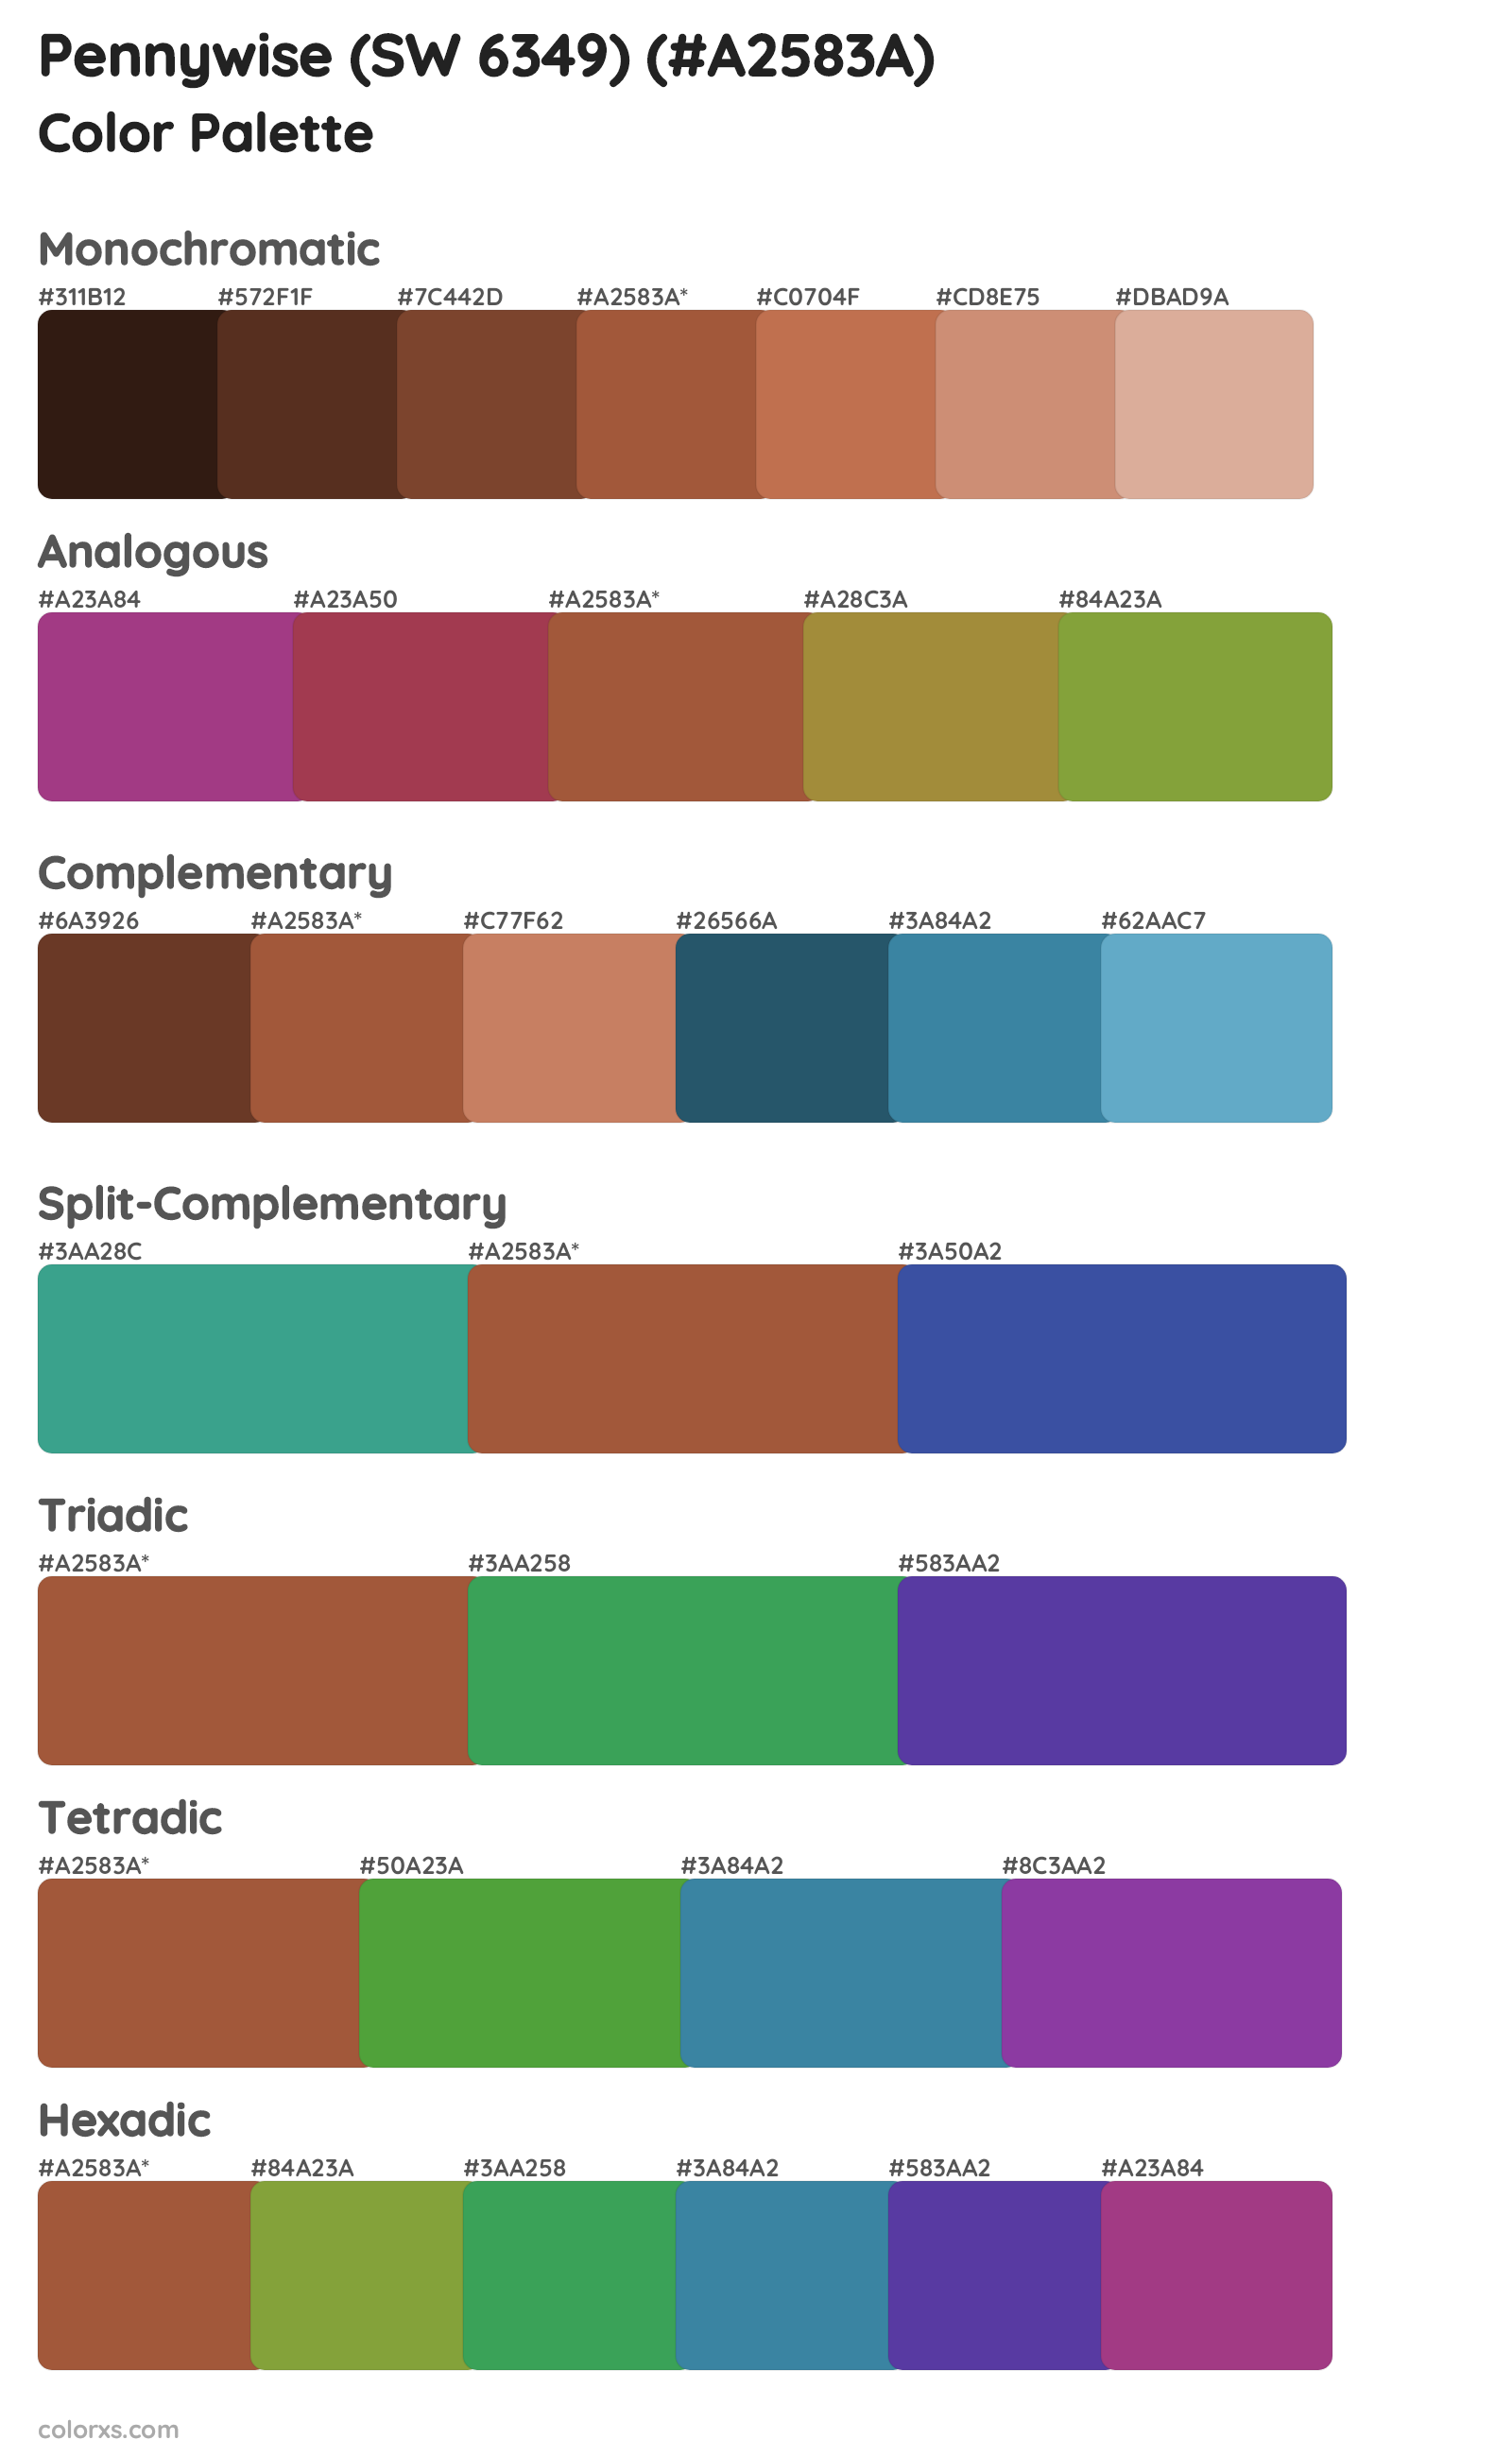 Pennywise (SW 6349) Color Scheme Palettes